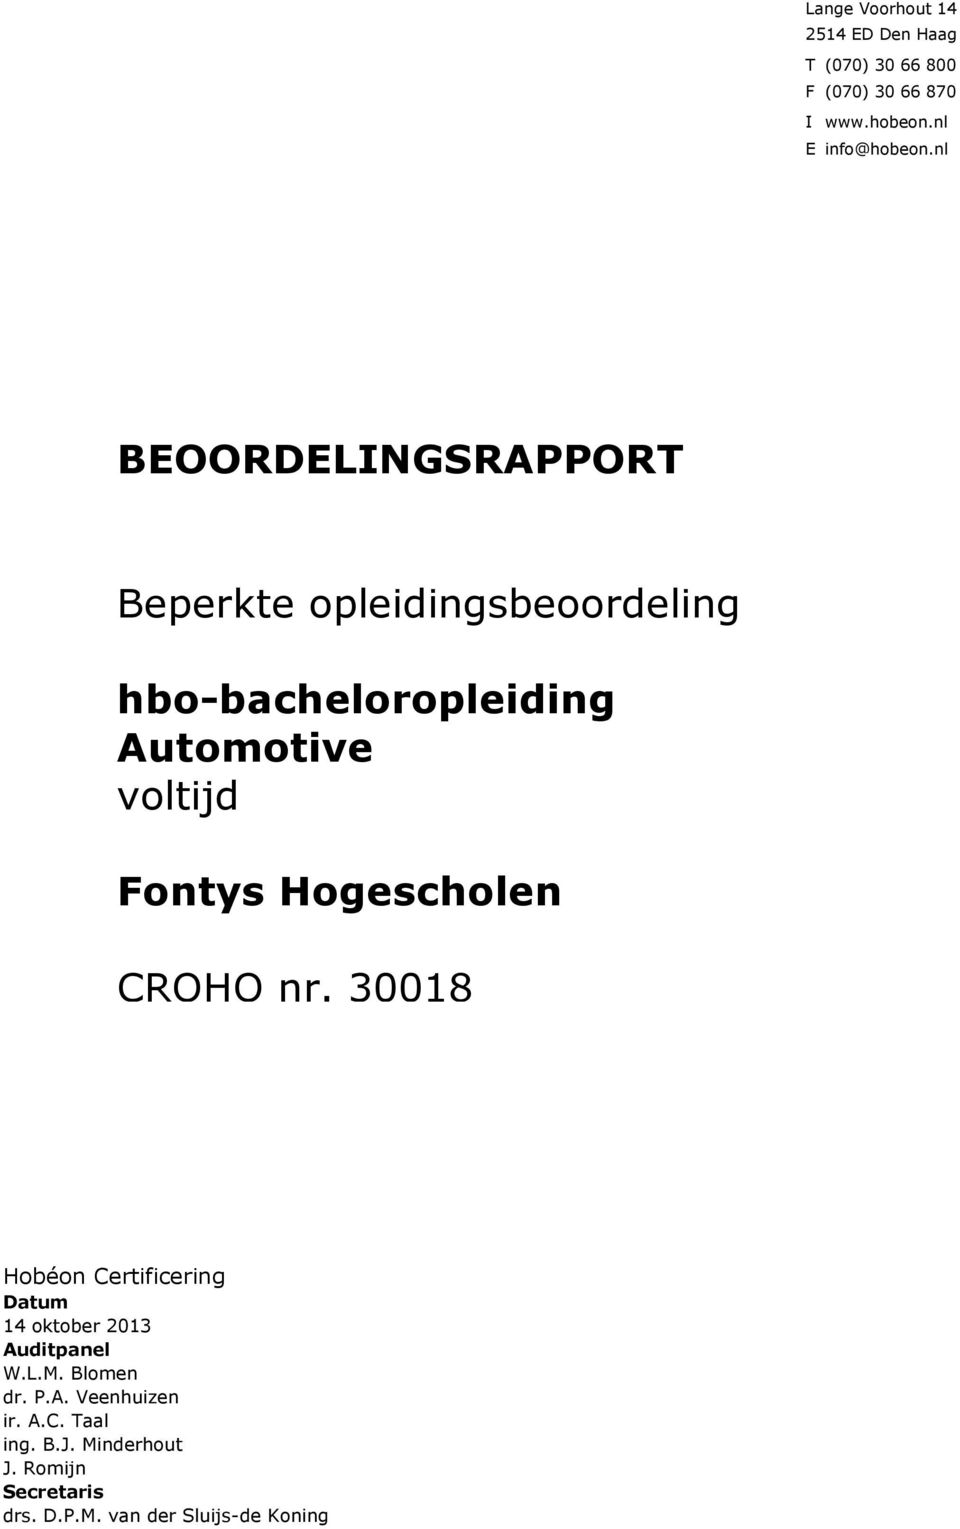 Hogescholen CROHO nr. 30018 Hobéon Certificering Datum 14 oktober 2013 Auditpanel W.L.M. Blomen dr. P.